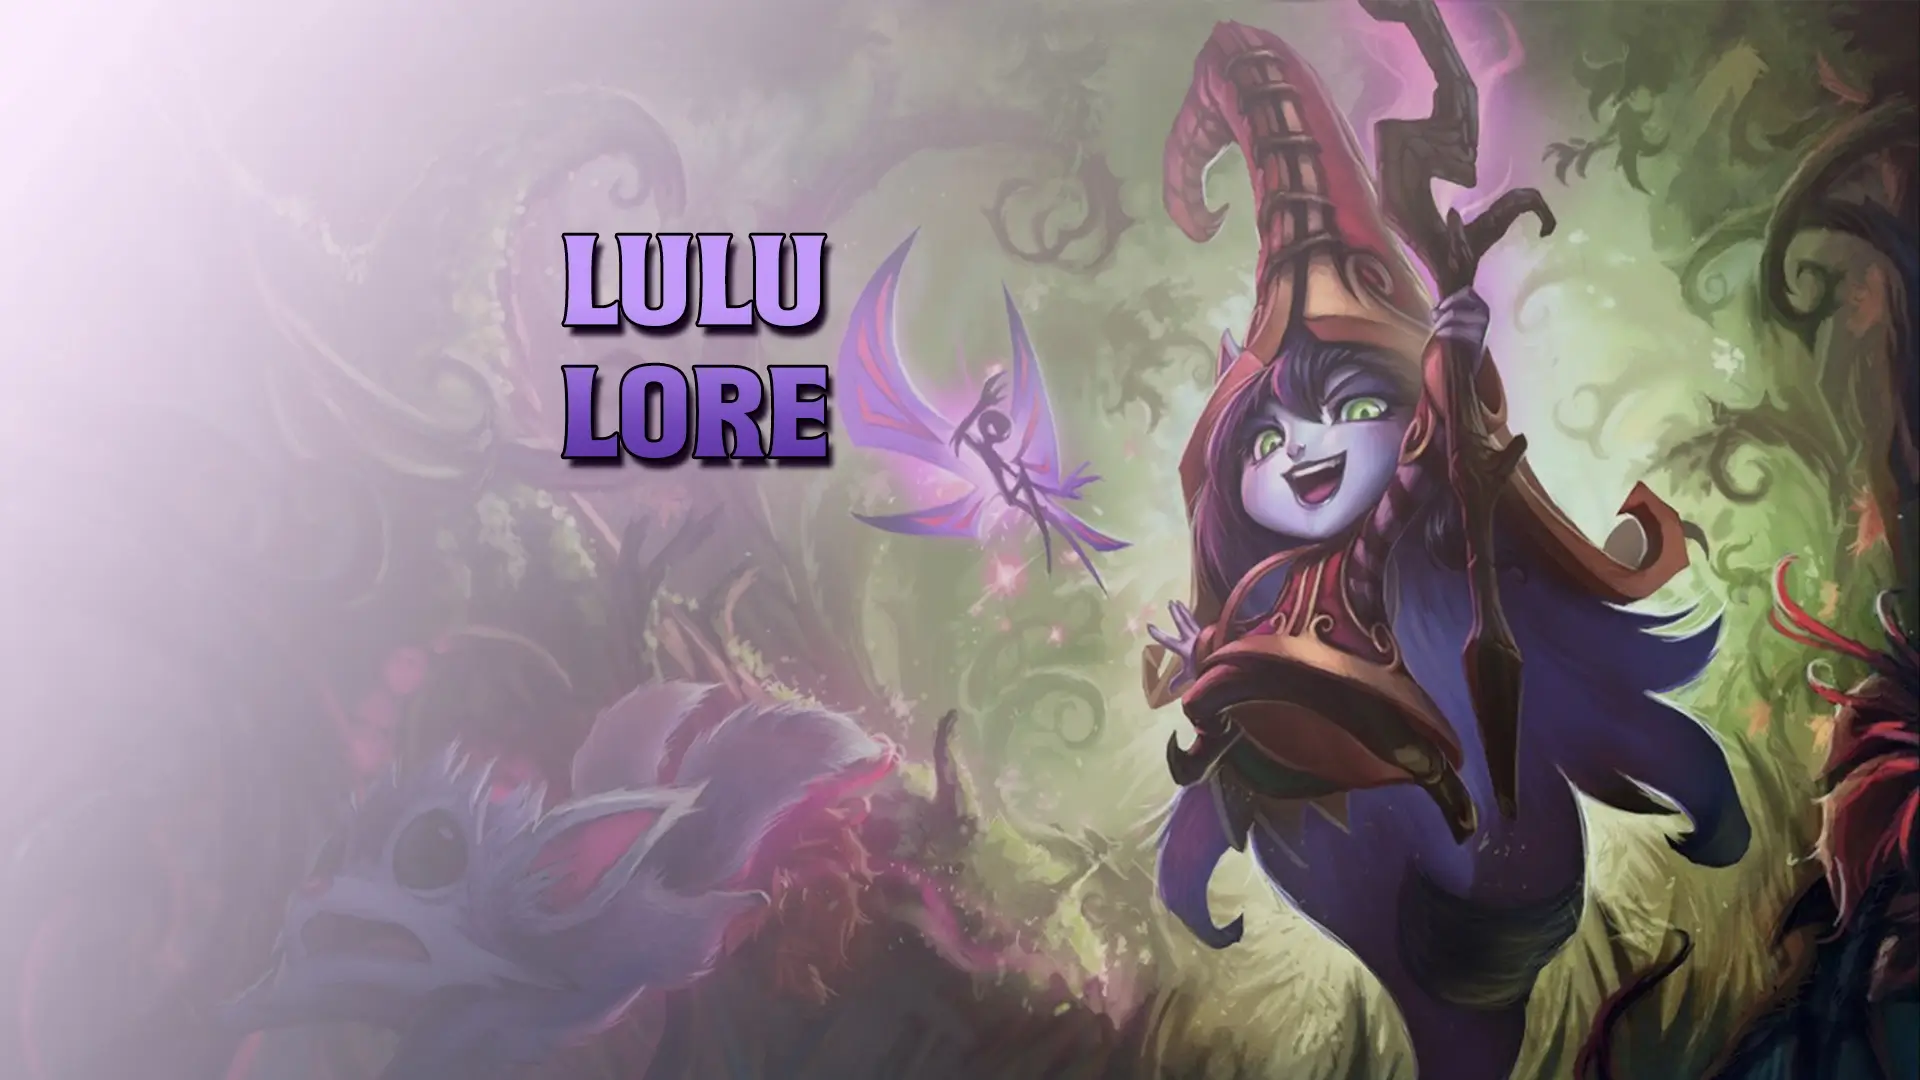 Lulu splash art with Lulu lore text overlayed